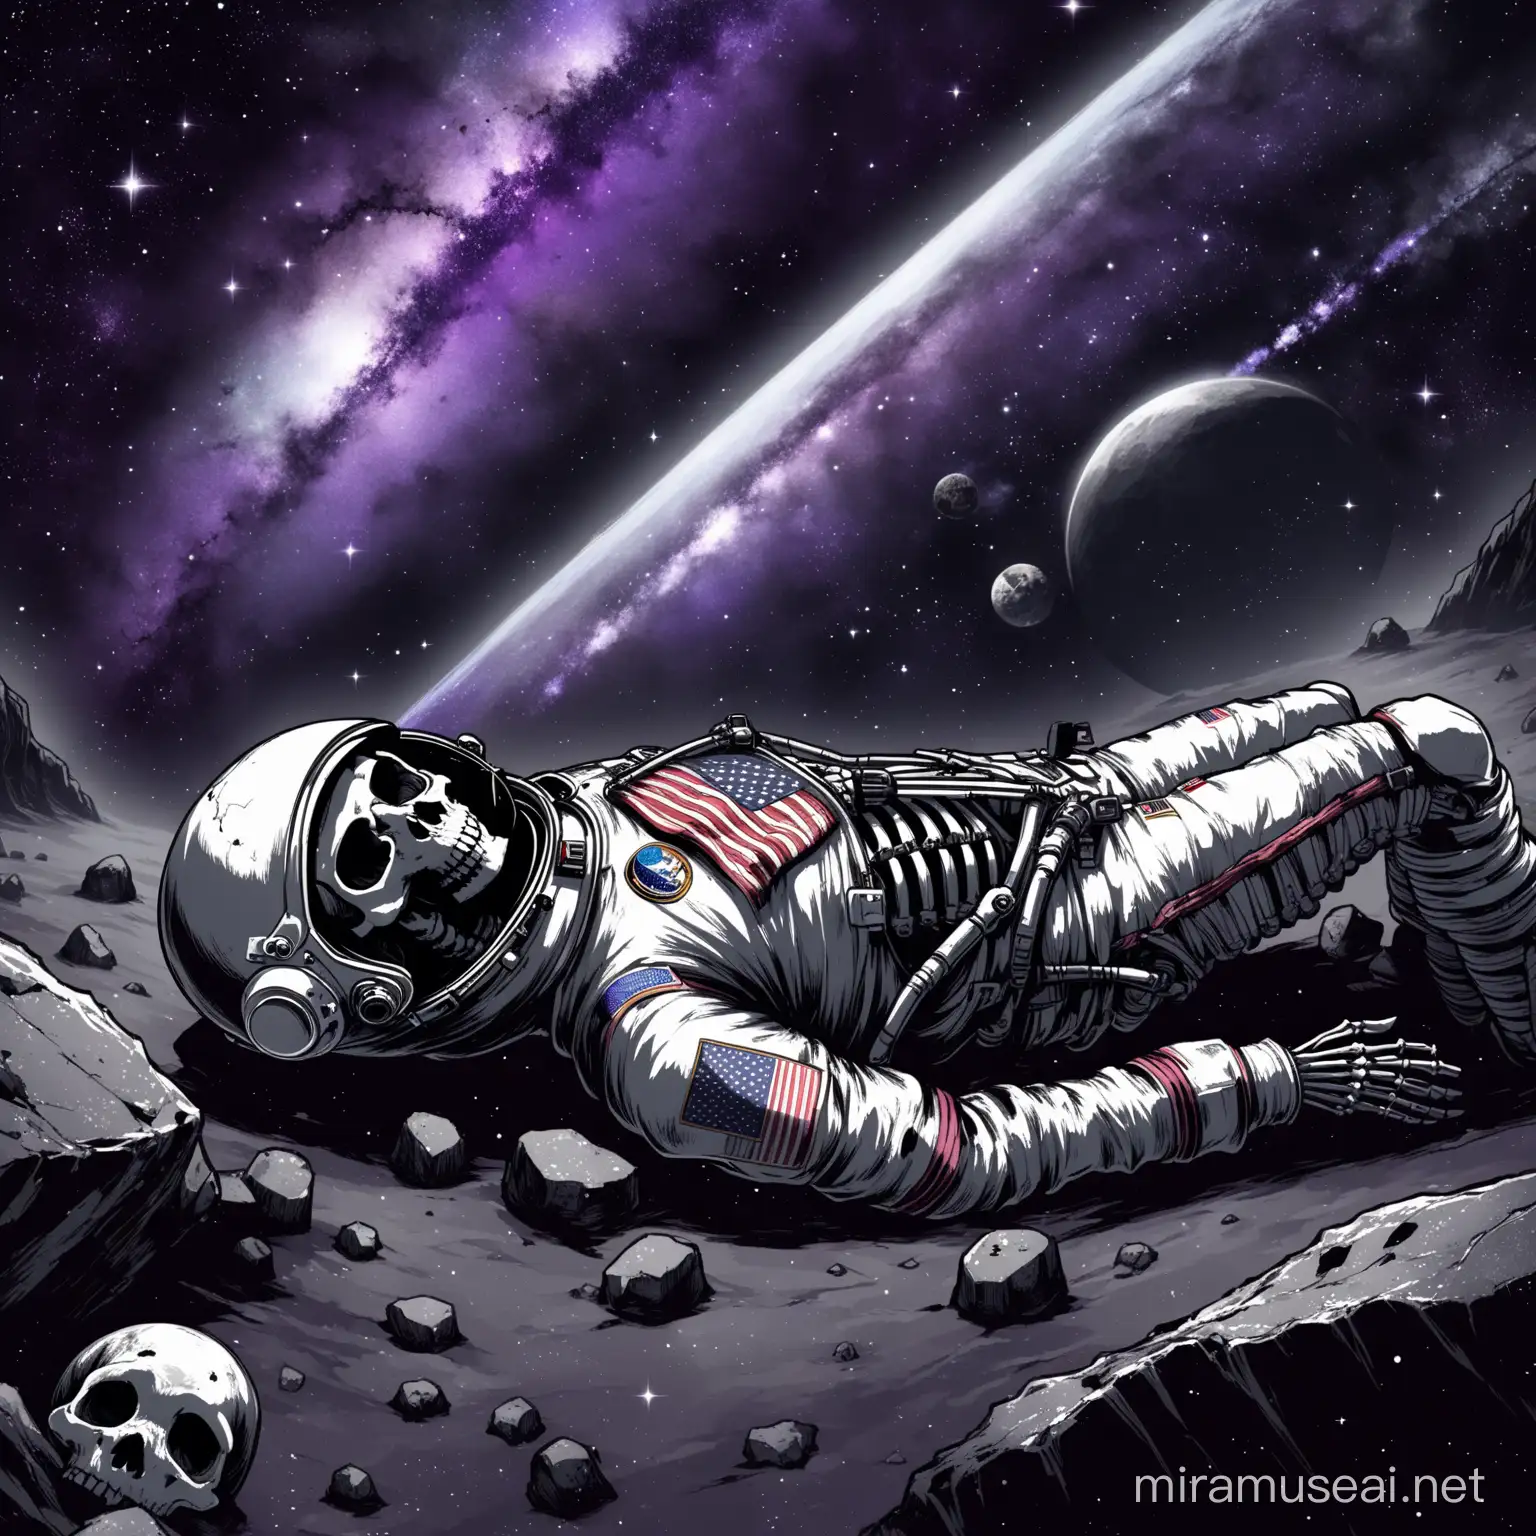 Decaying Astronaut Skeleton Resting Against Lunar Rocks in Noir Space Scene